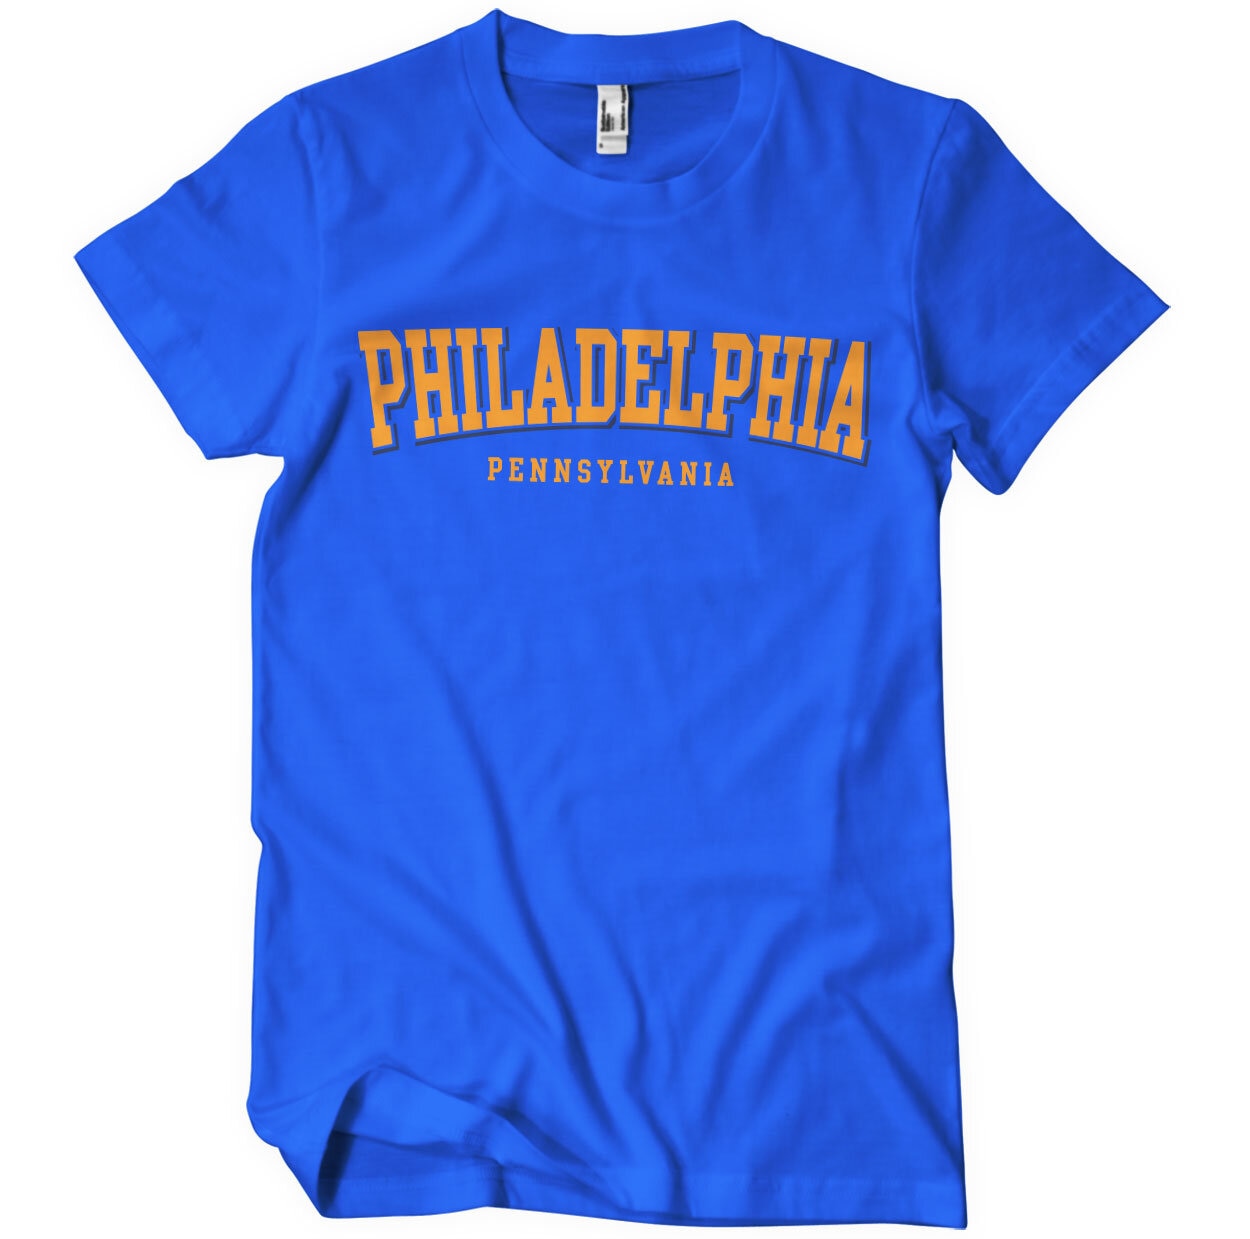 Philadephia - Pennsylvania T-Shirt